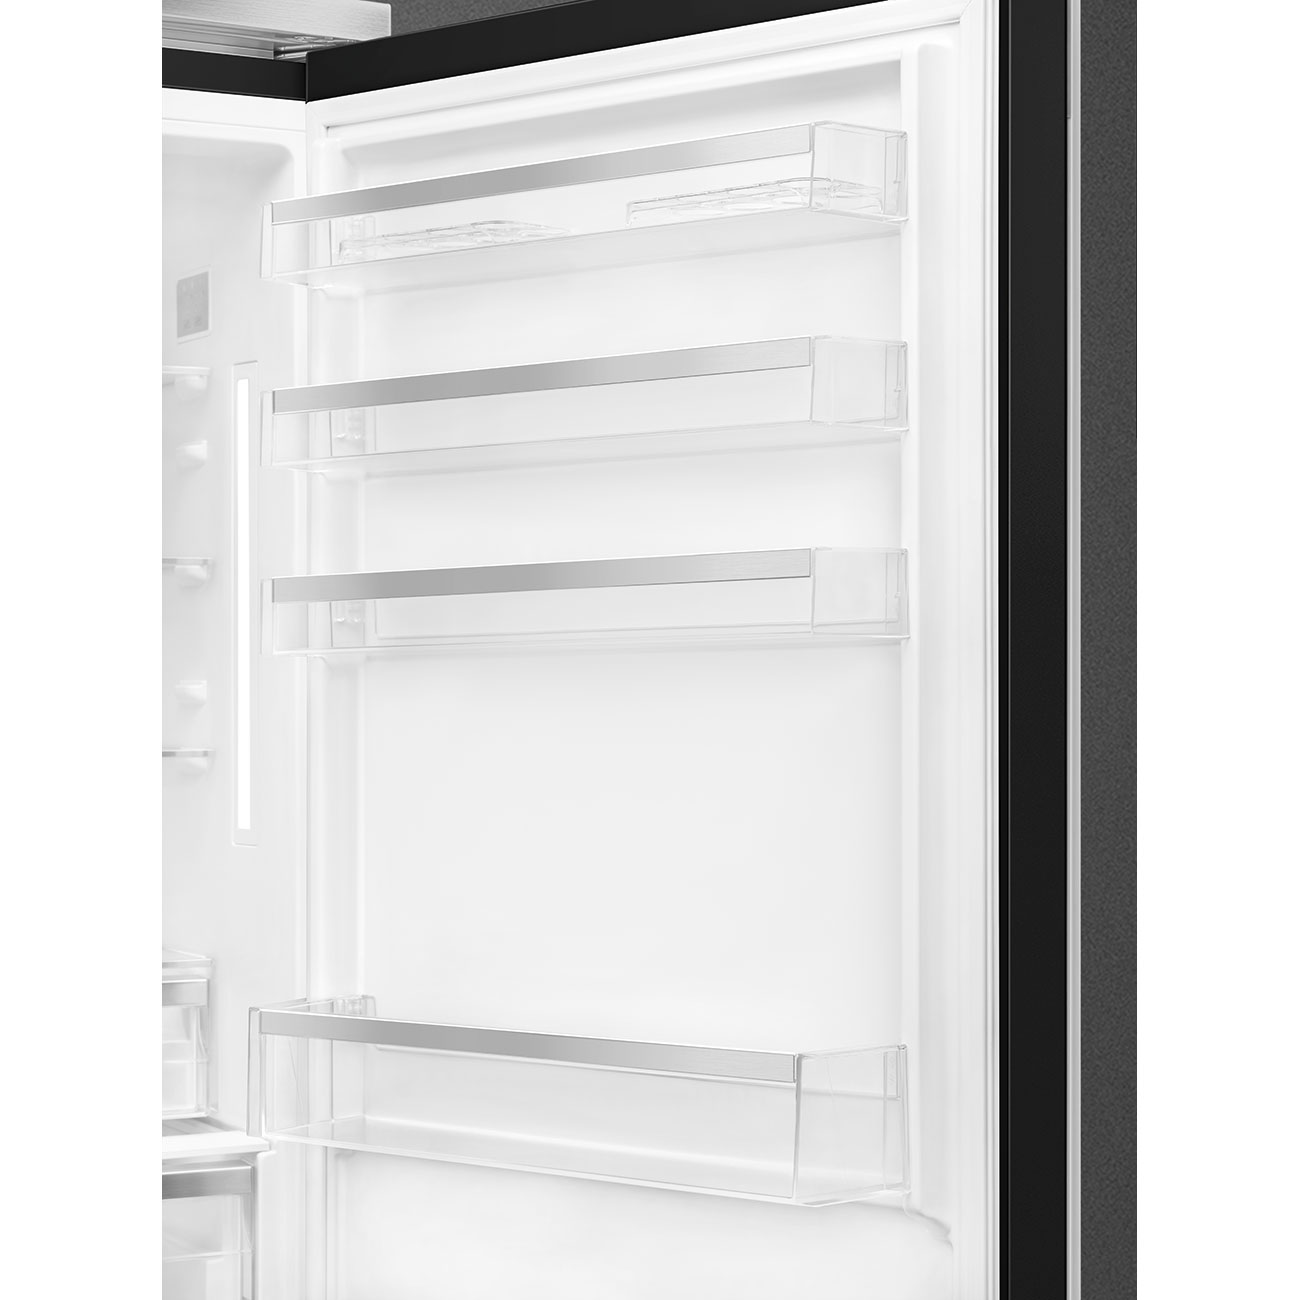 Bottom Mount Free standing refrigerator - Smeg_8